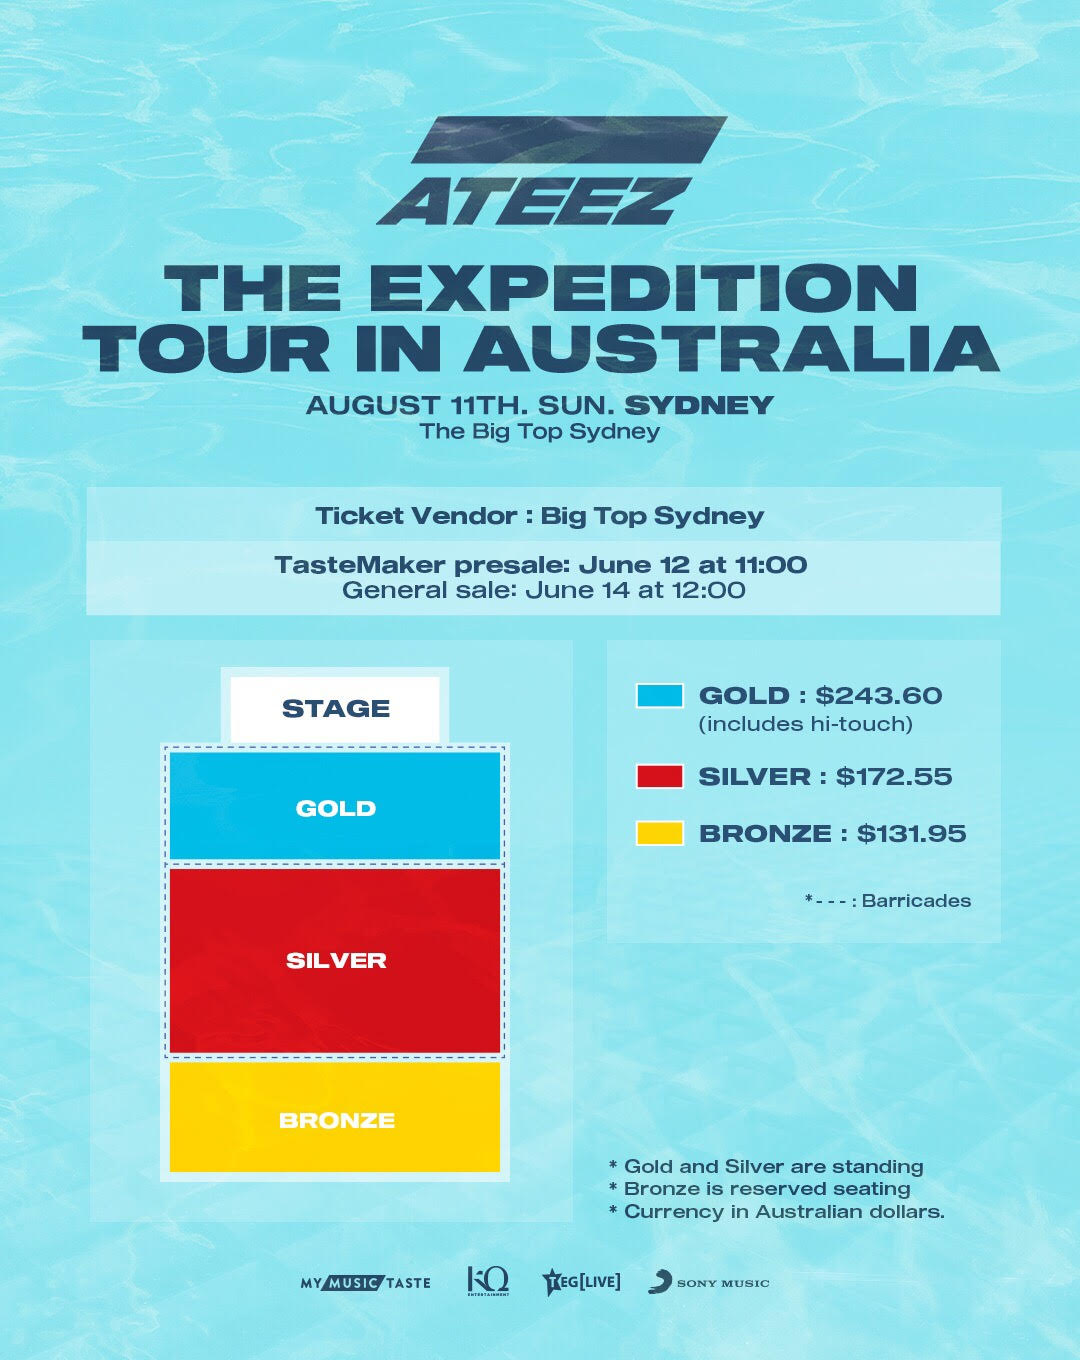 2 ATEEZ 官宣：“THE EXPEDITION” 世界巡回演唱会即将到达澳洲